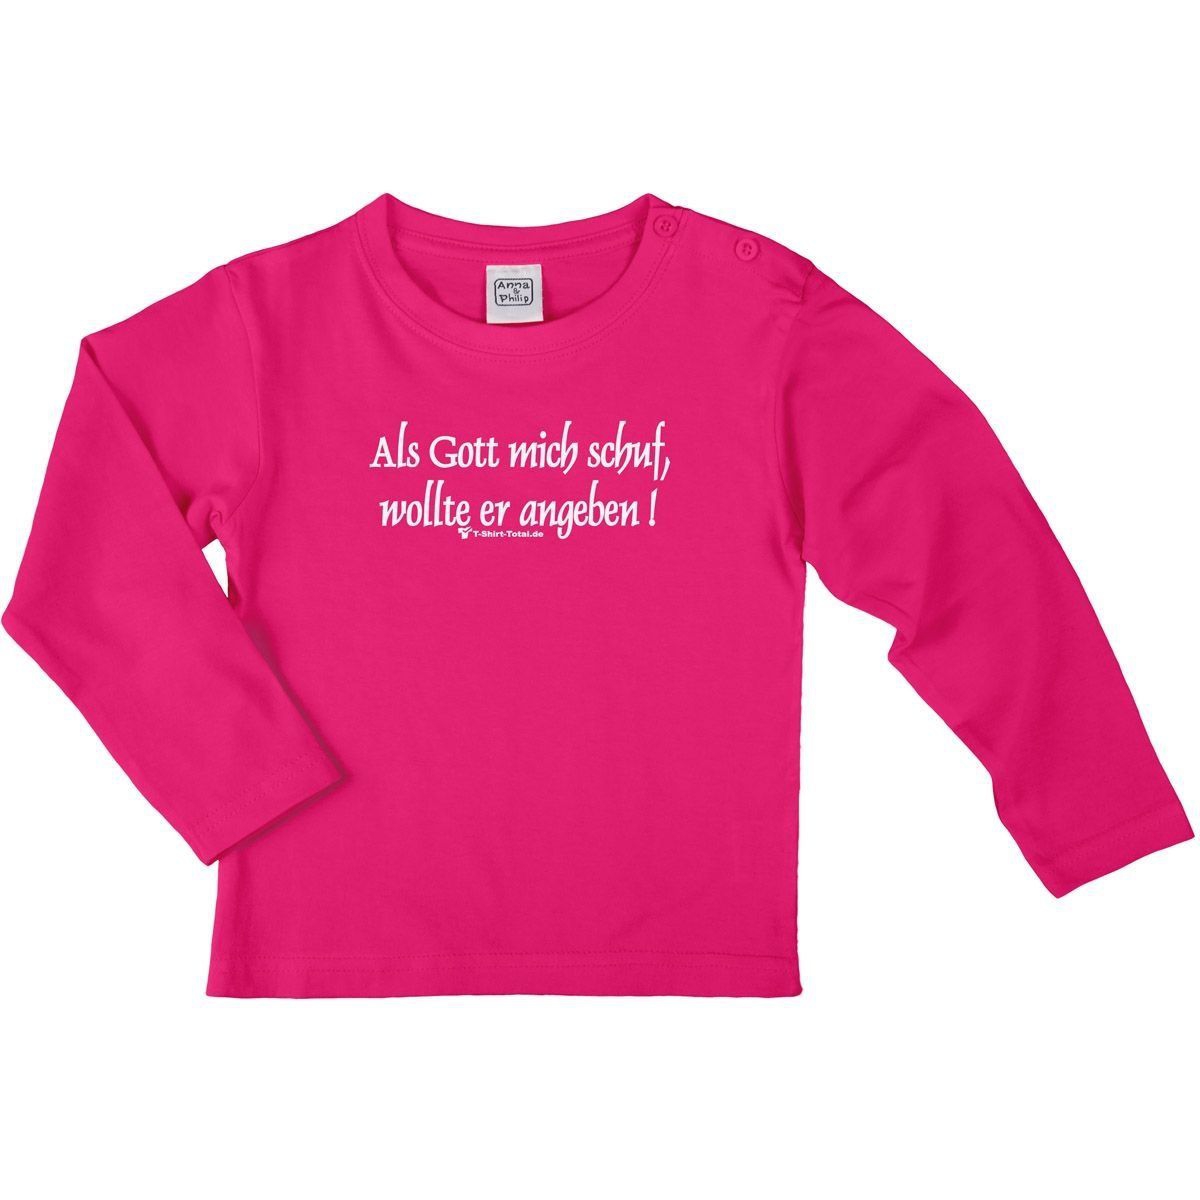 Als Gott mich schuf Kinder Langarm Shirt pink 56 / 62